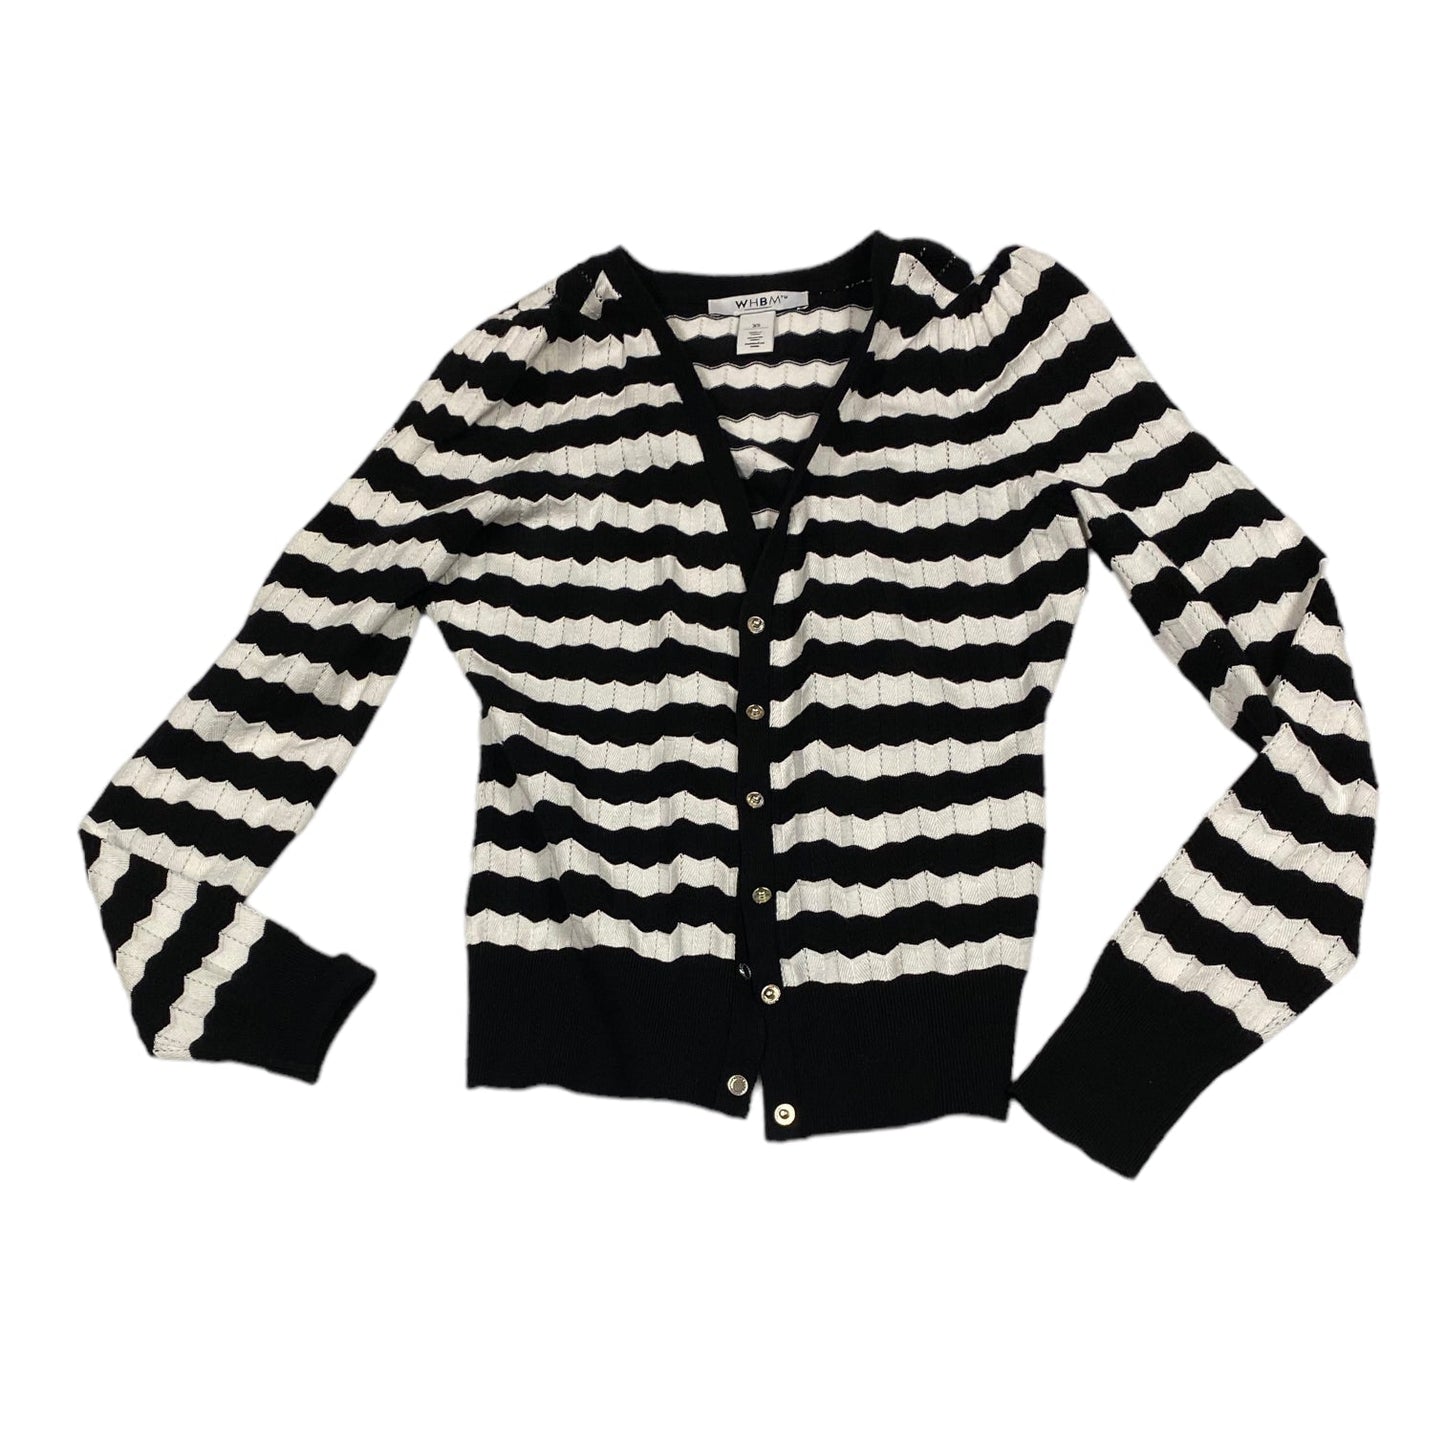 Sweater Cardigan By White House Black Market  Size: Xs